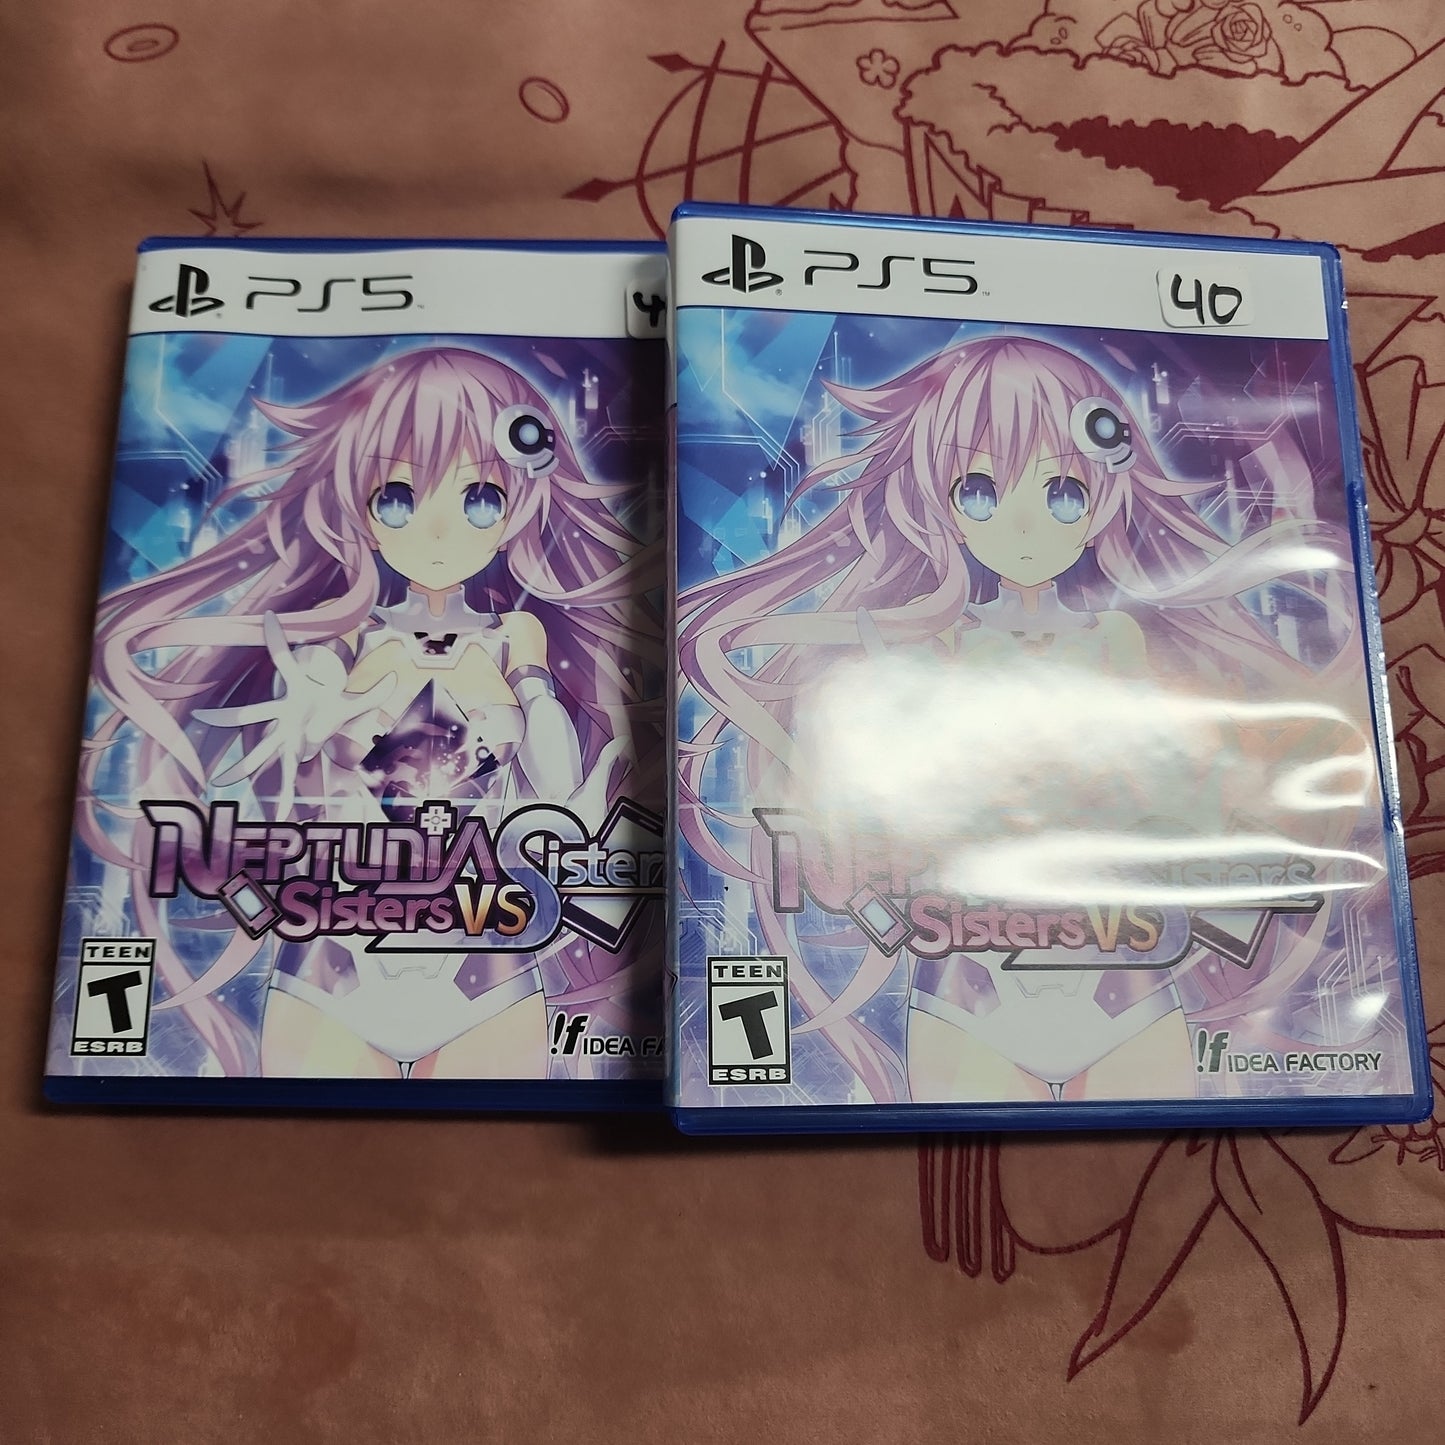 Neptunia Sisters vs Sisters - Playstation 5